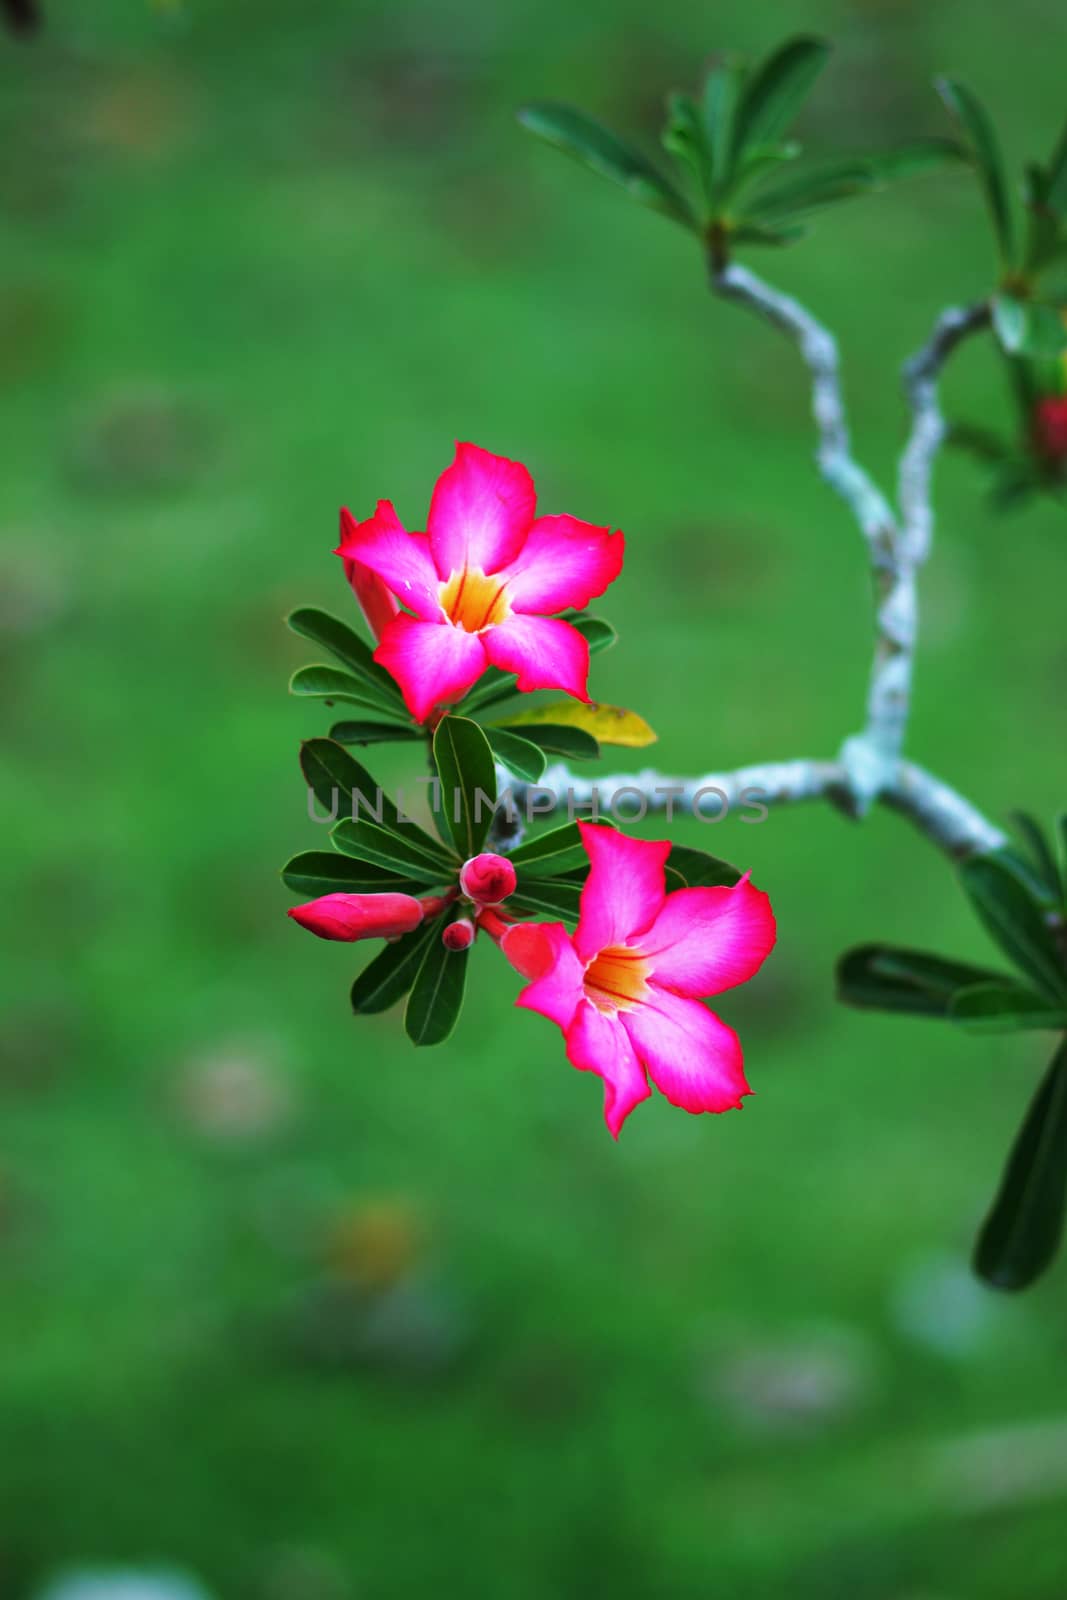 Tropical flower Pink Adenium. Desert rose.